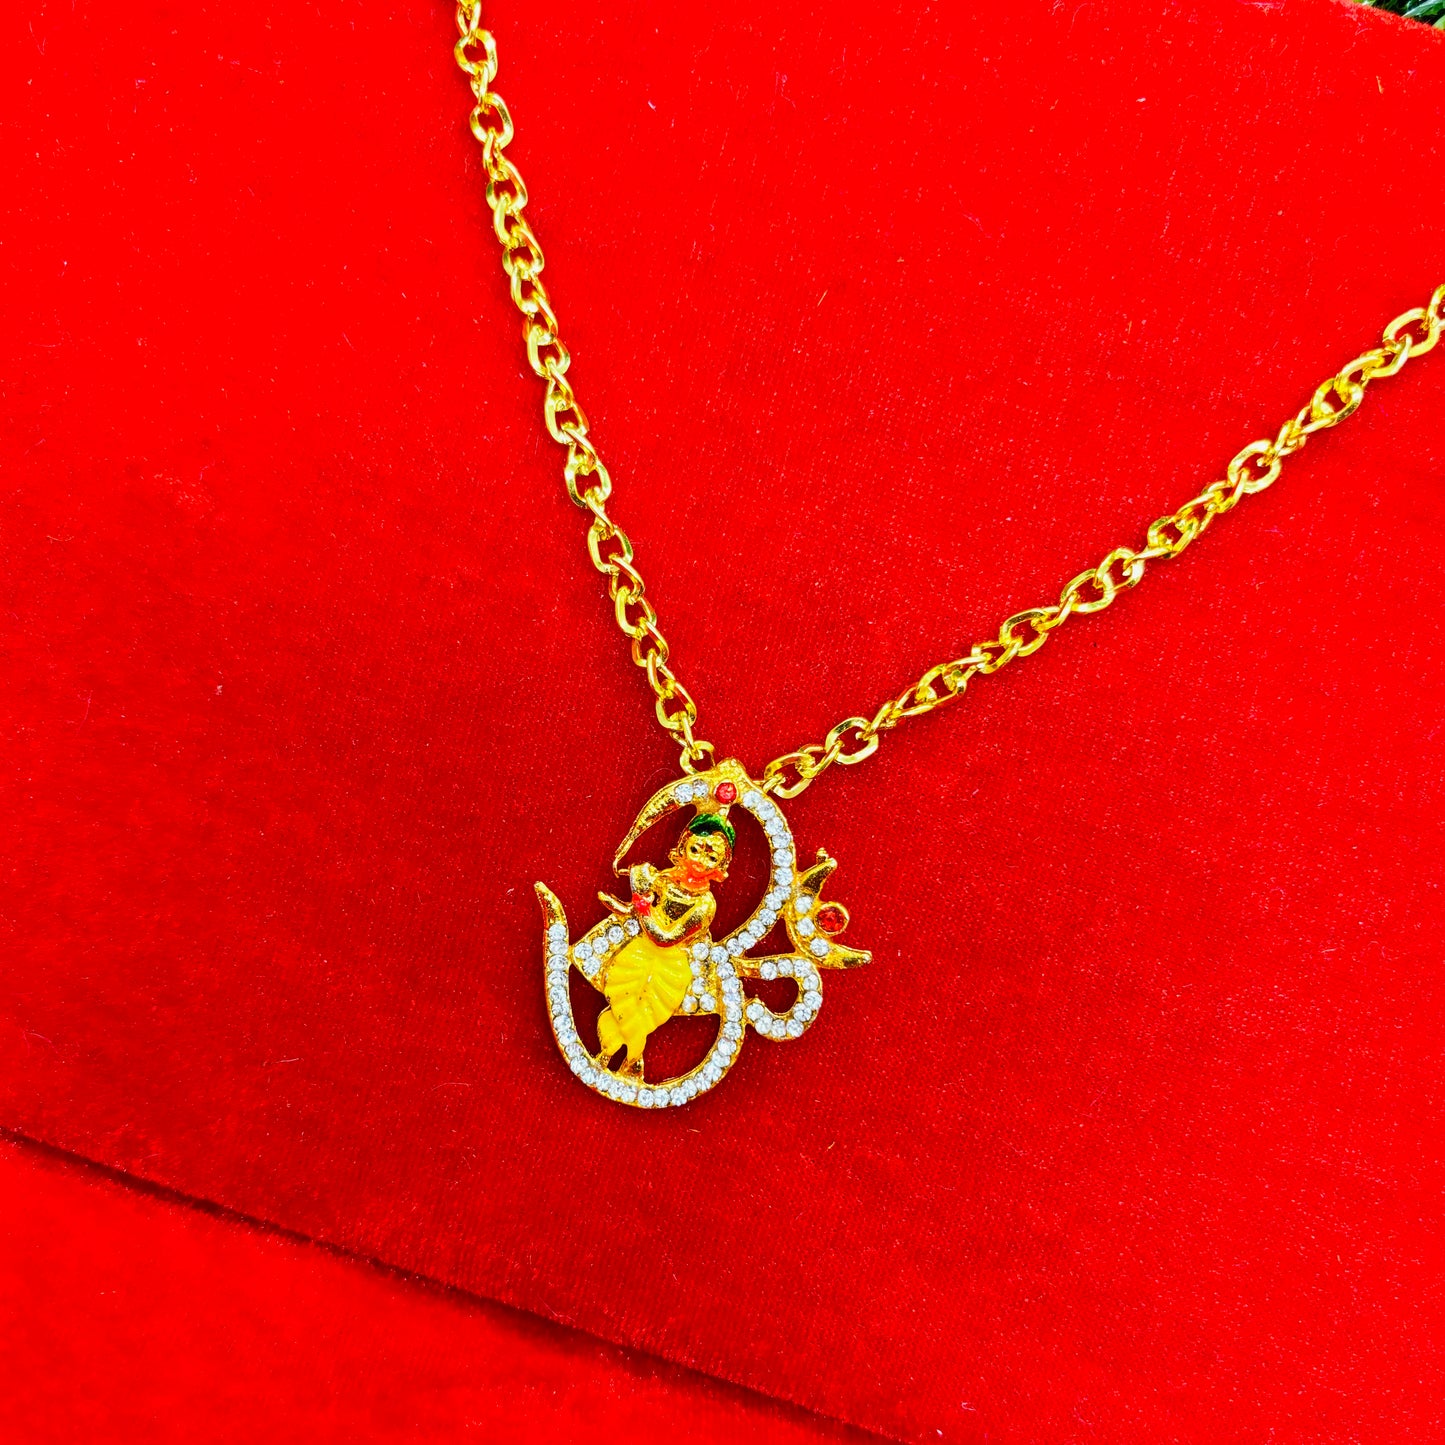 Om krishna locket with chain